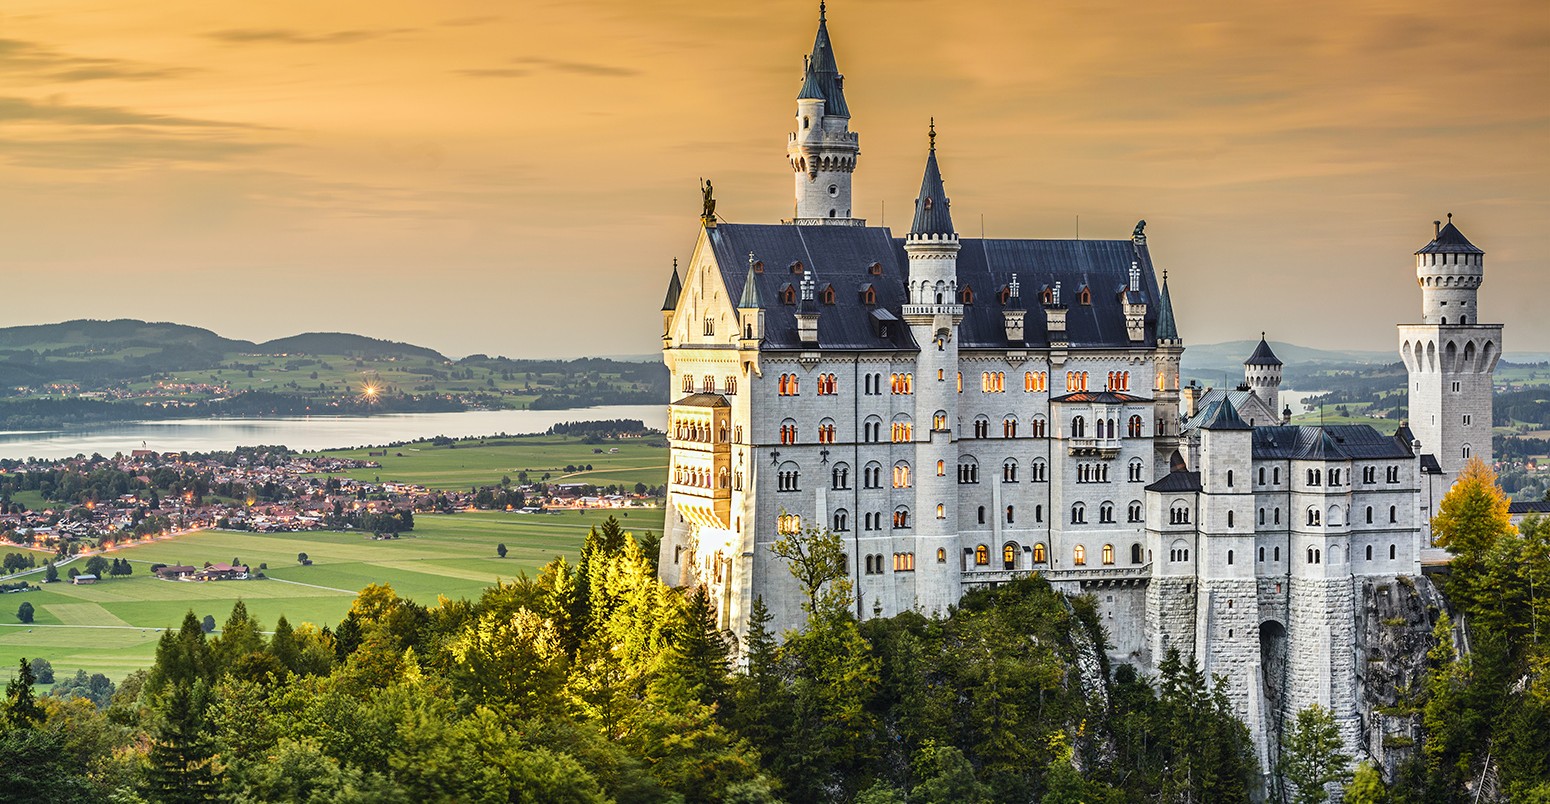 Neuschwanstein Castle in the Bavarian Alps of Germany